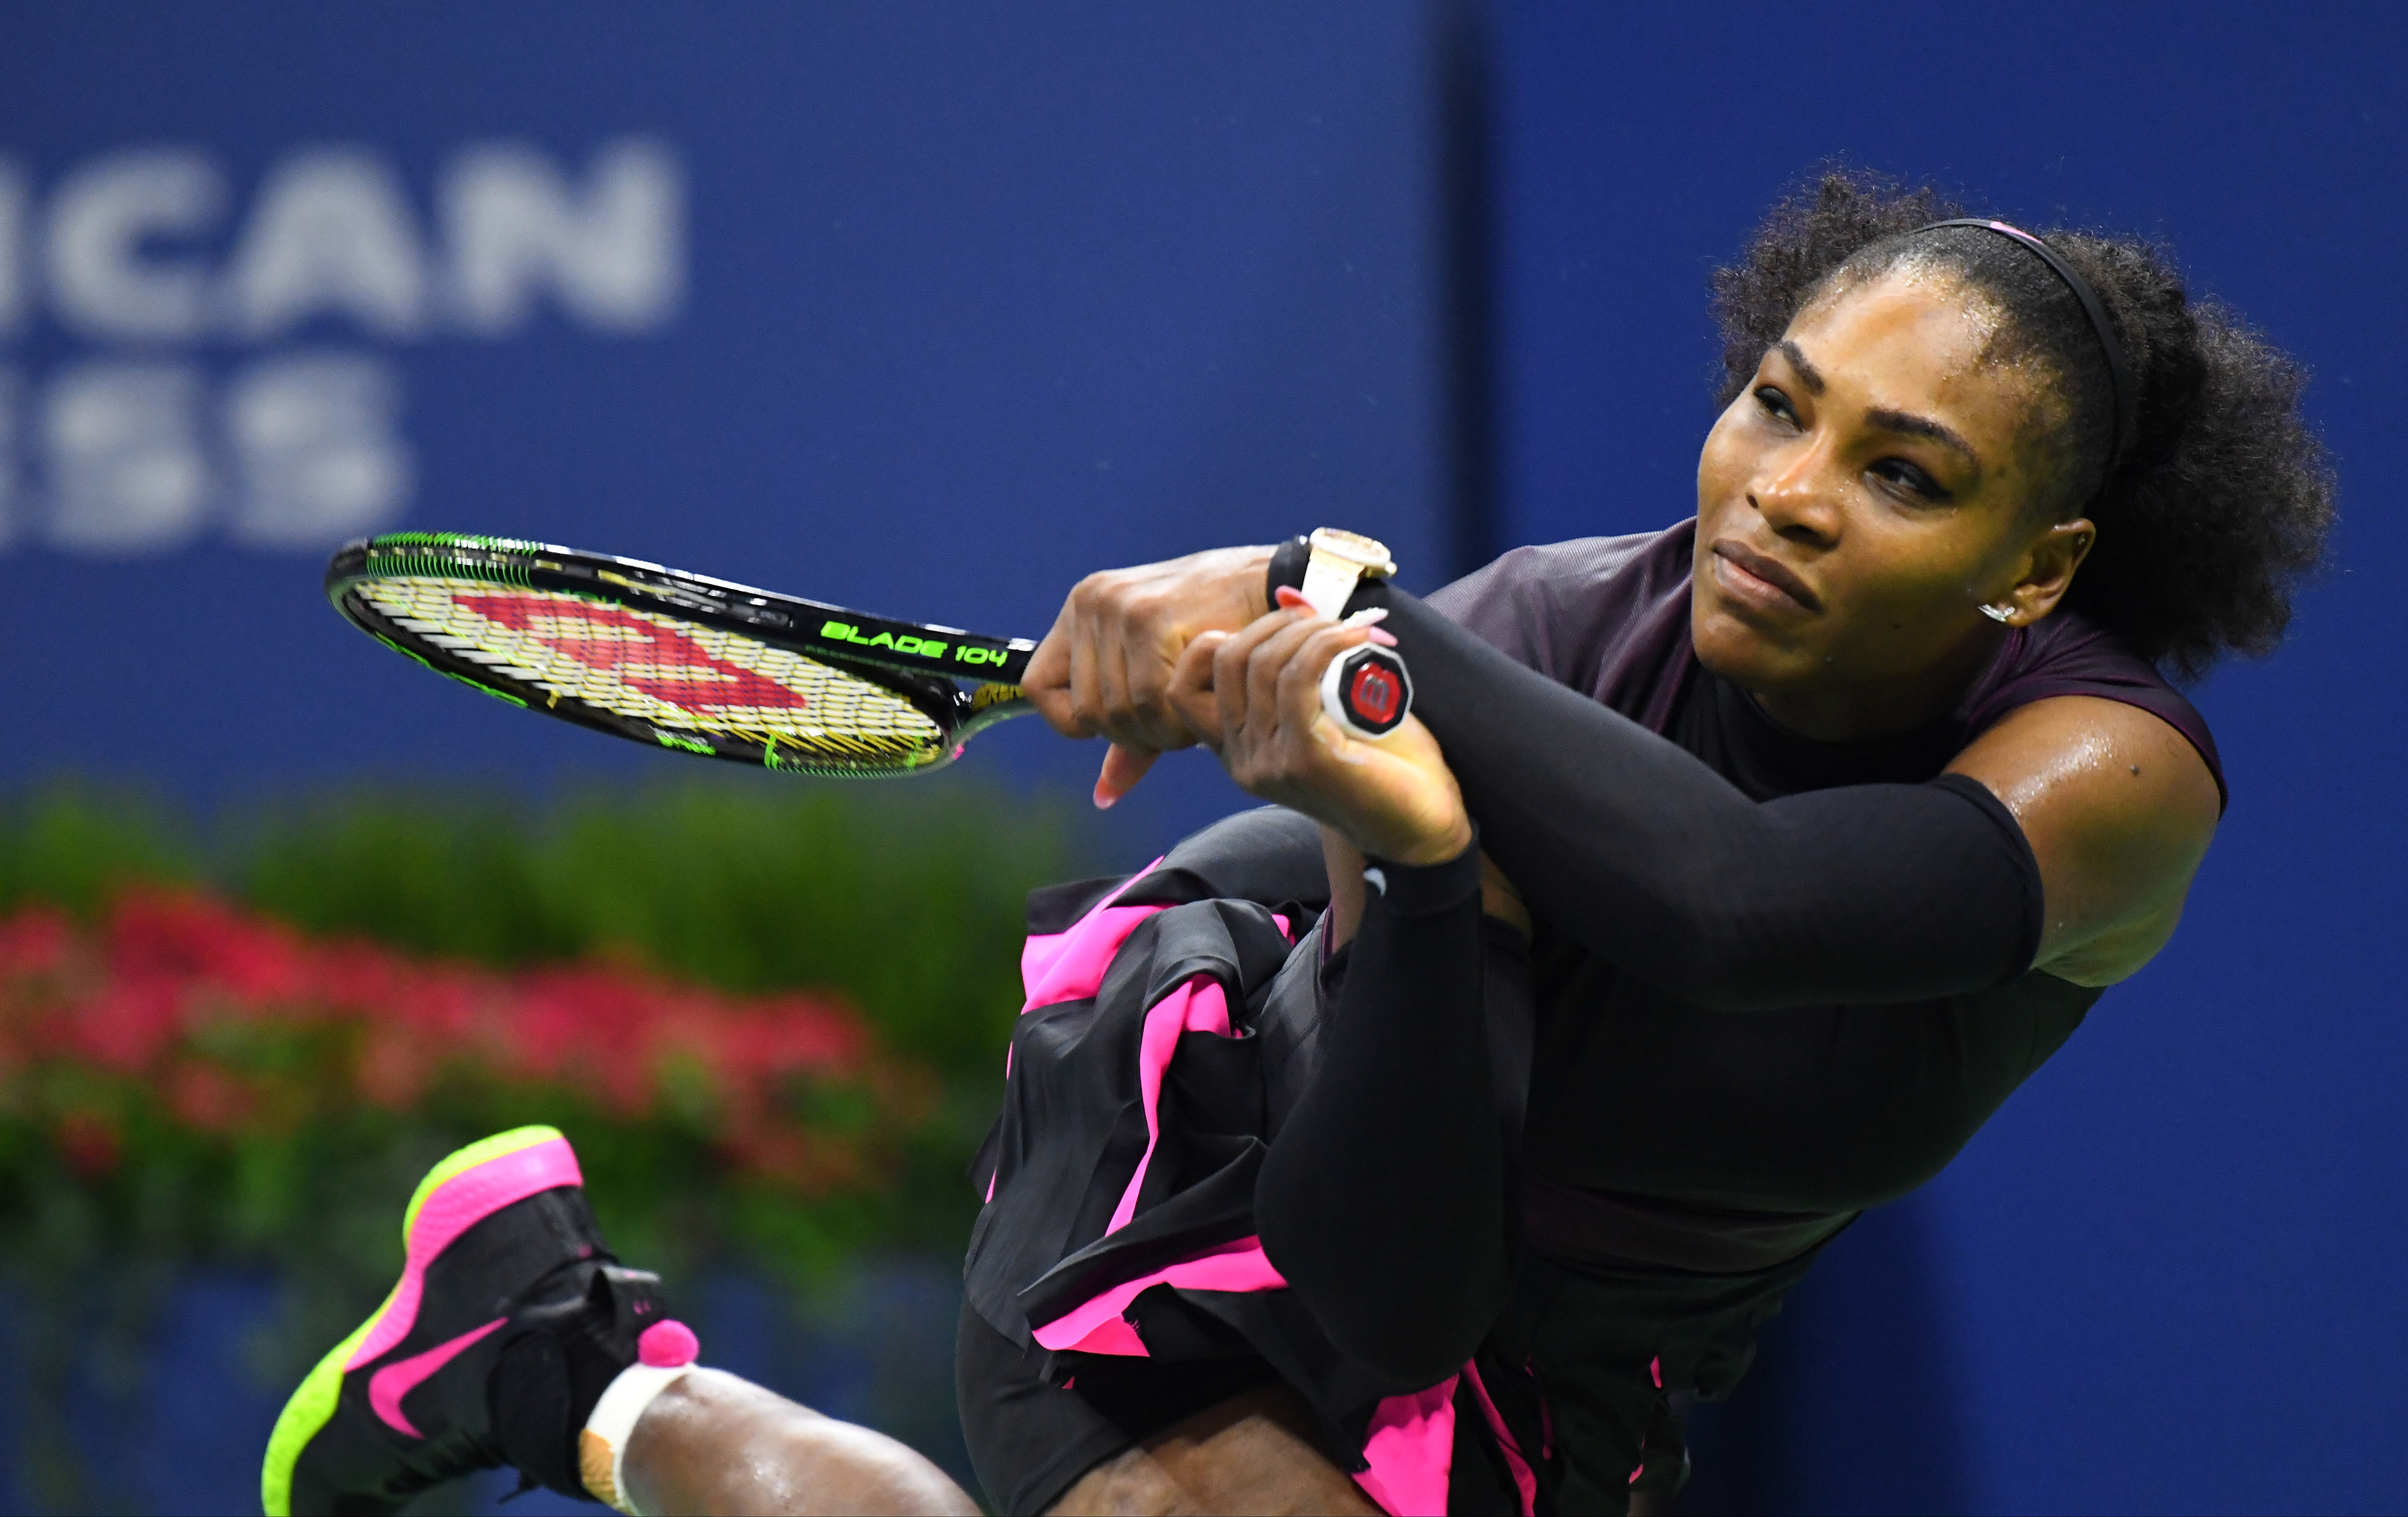 John McEnroe thinks Serena Williams would be ranked 700th if she played the mens circuit ksdk